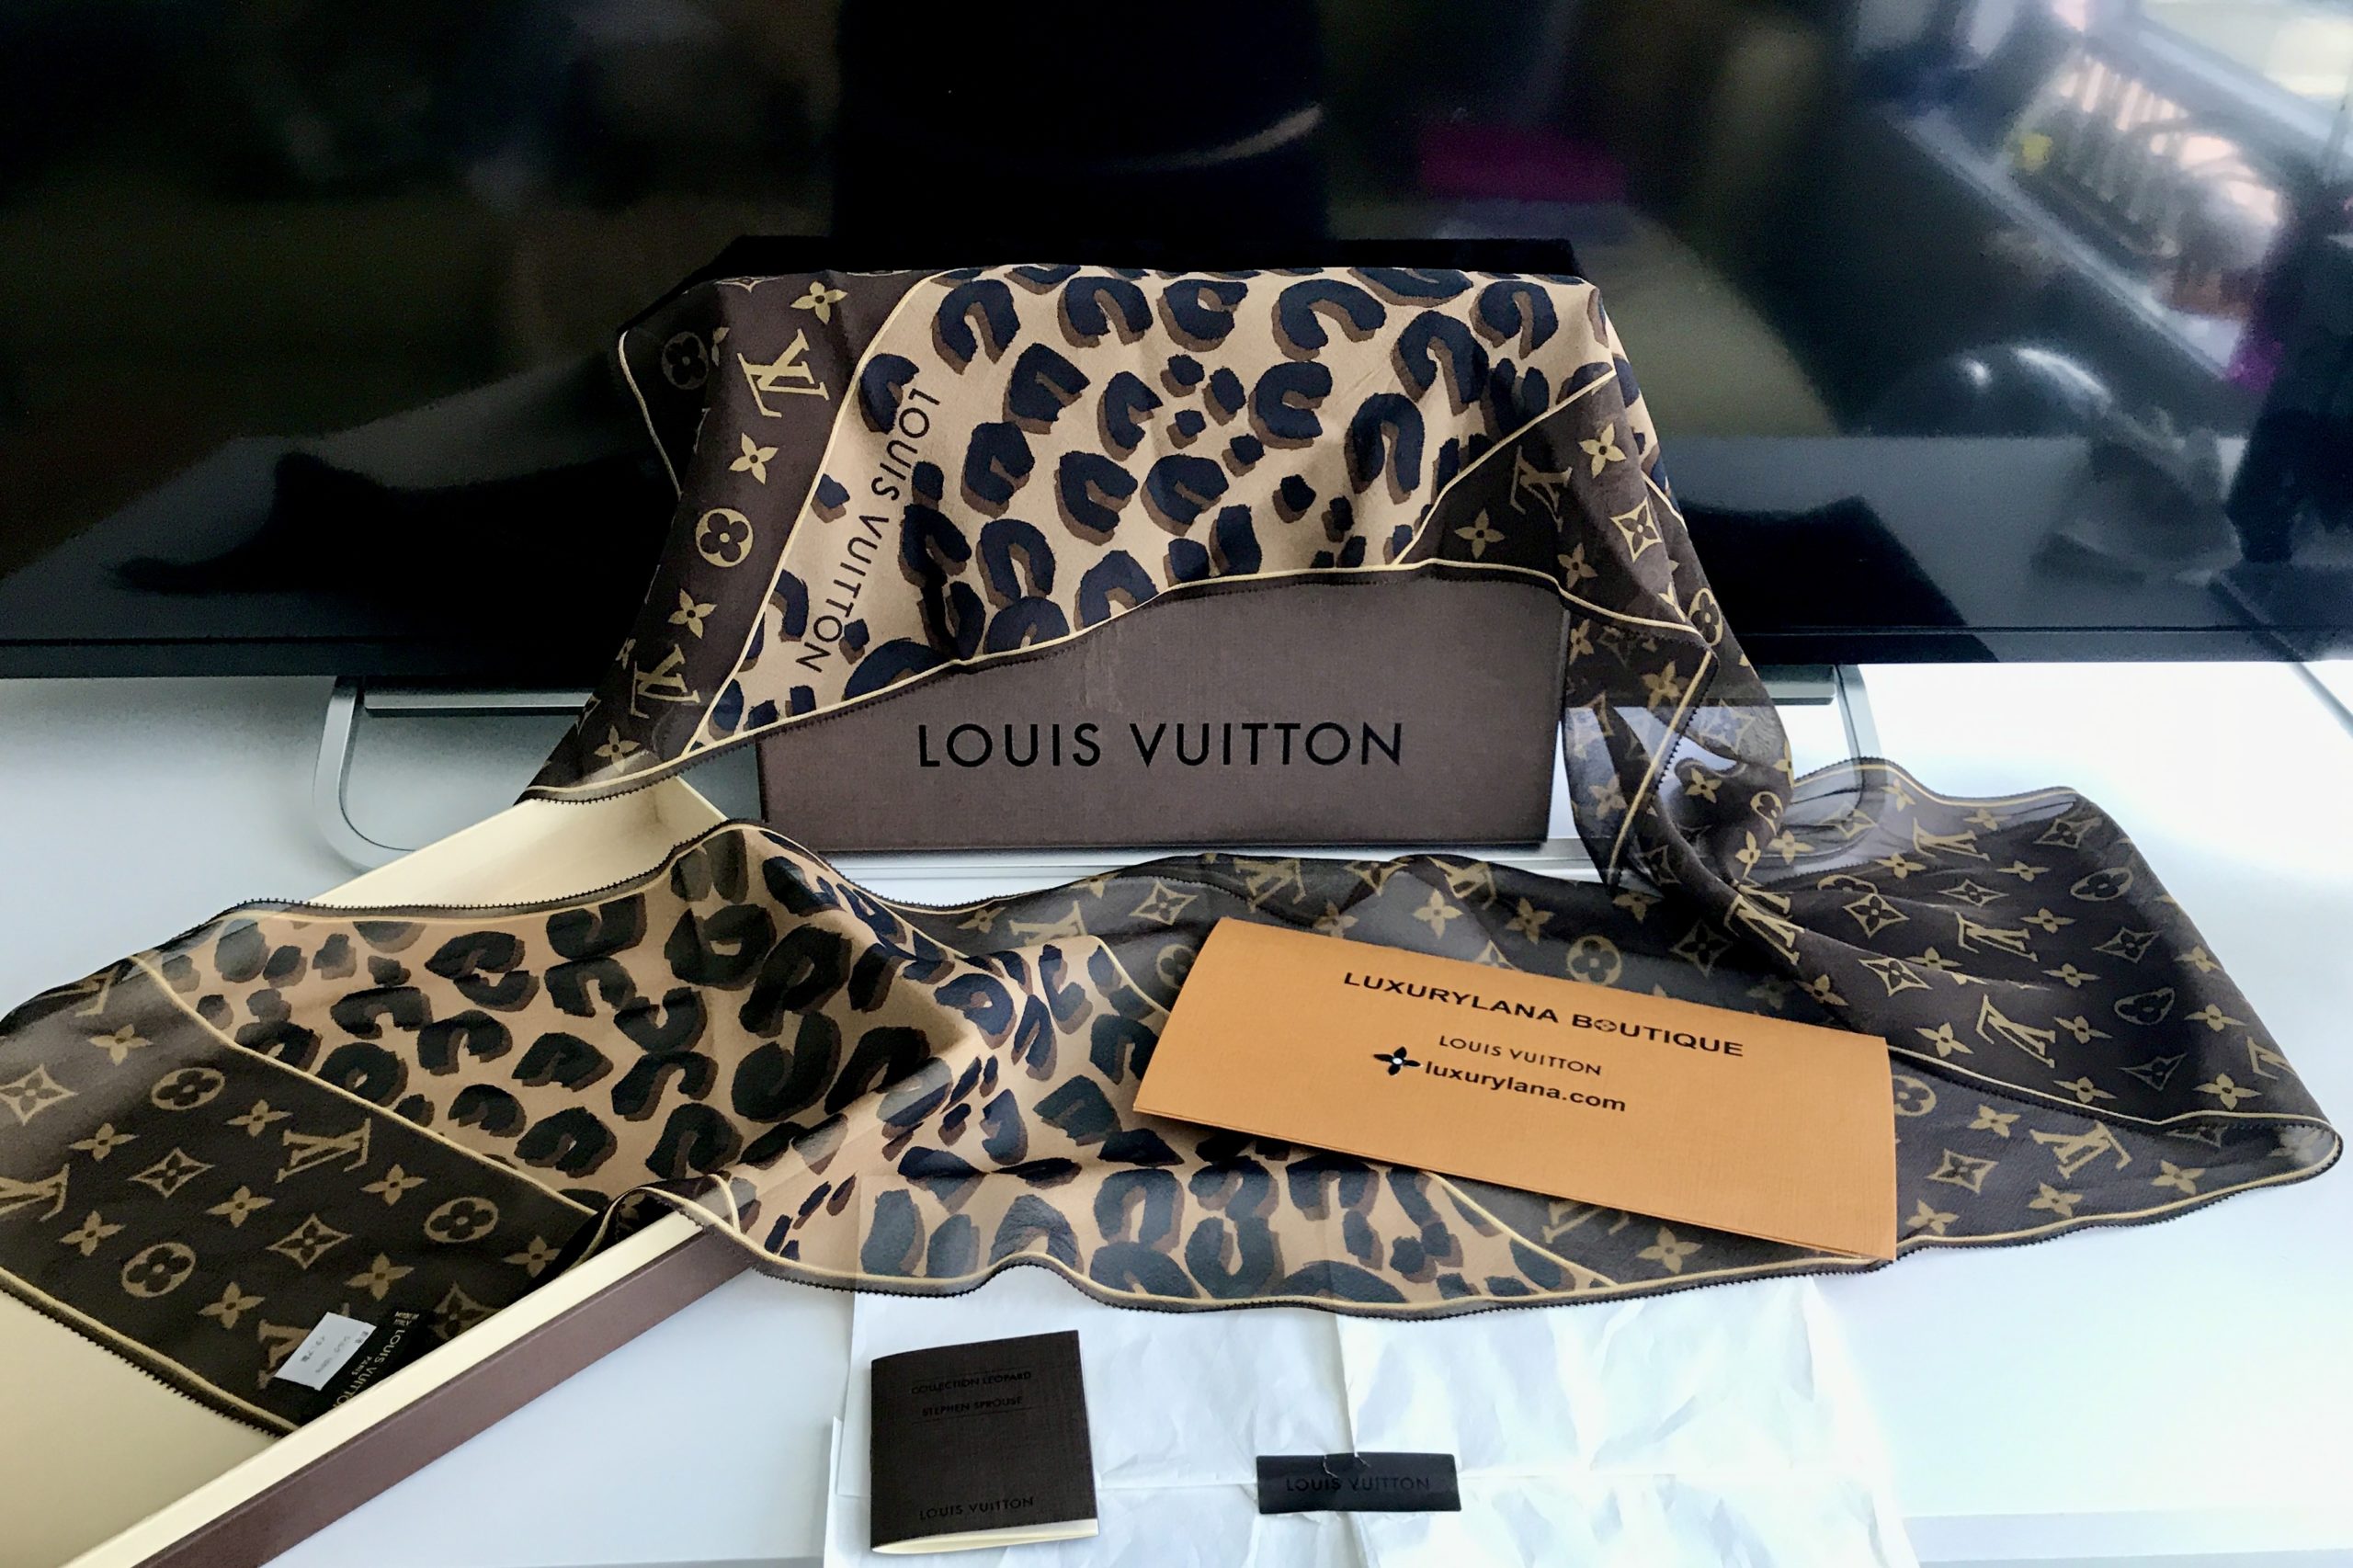 Louis Vuitton x Stephen Sprouse pre-owned logo-print Headband - Farfetch